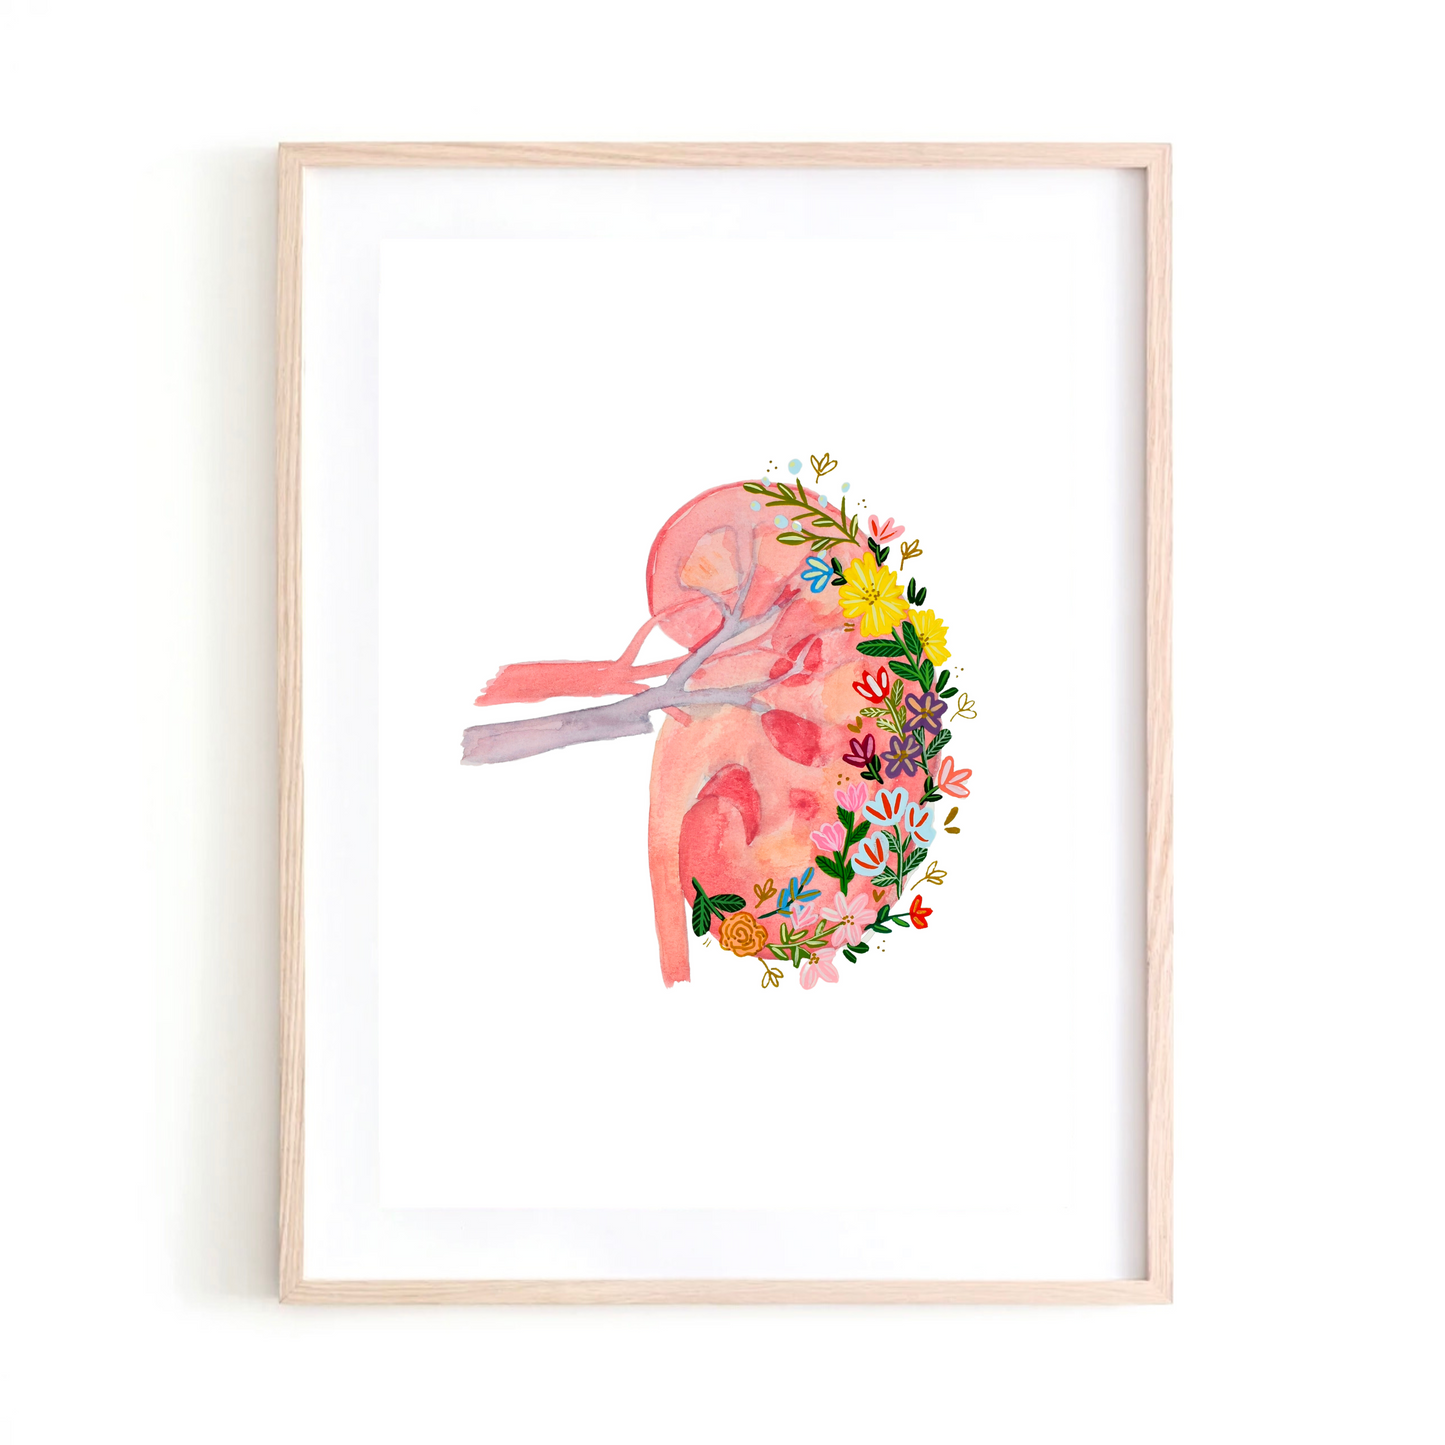 Kidney Medicine & Flowers art print